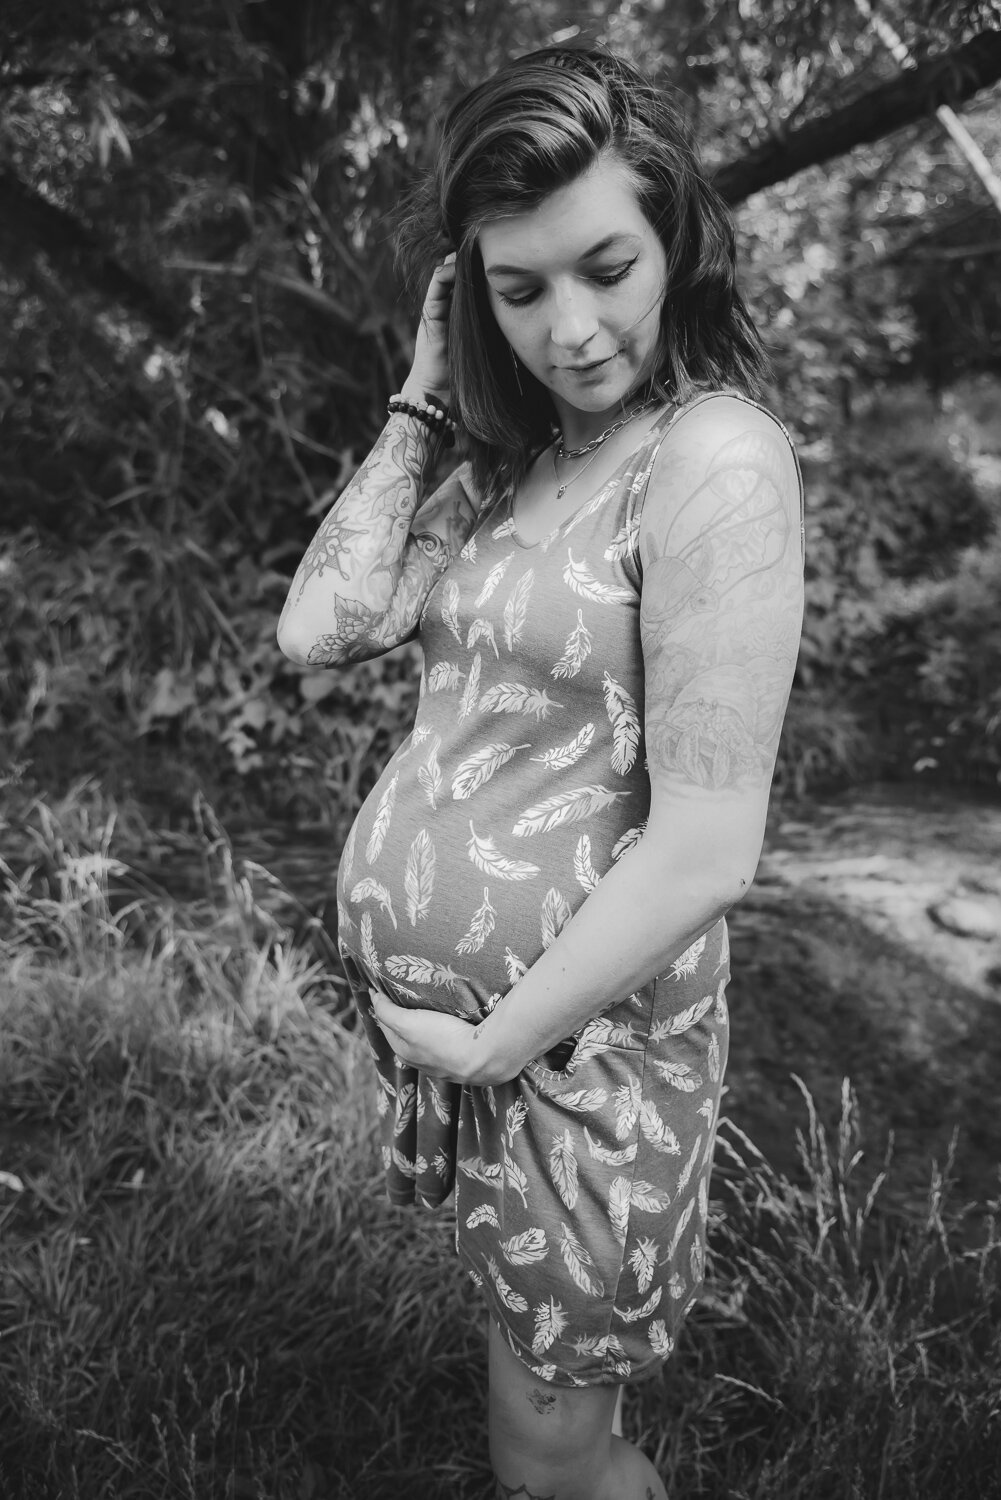 Denver maternity photography near Denver, Colorado at Prospect Park